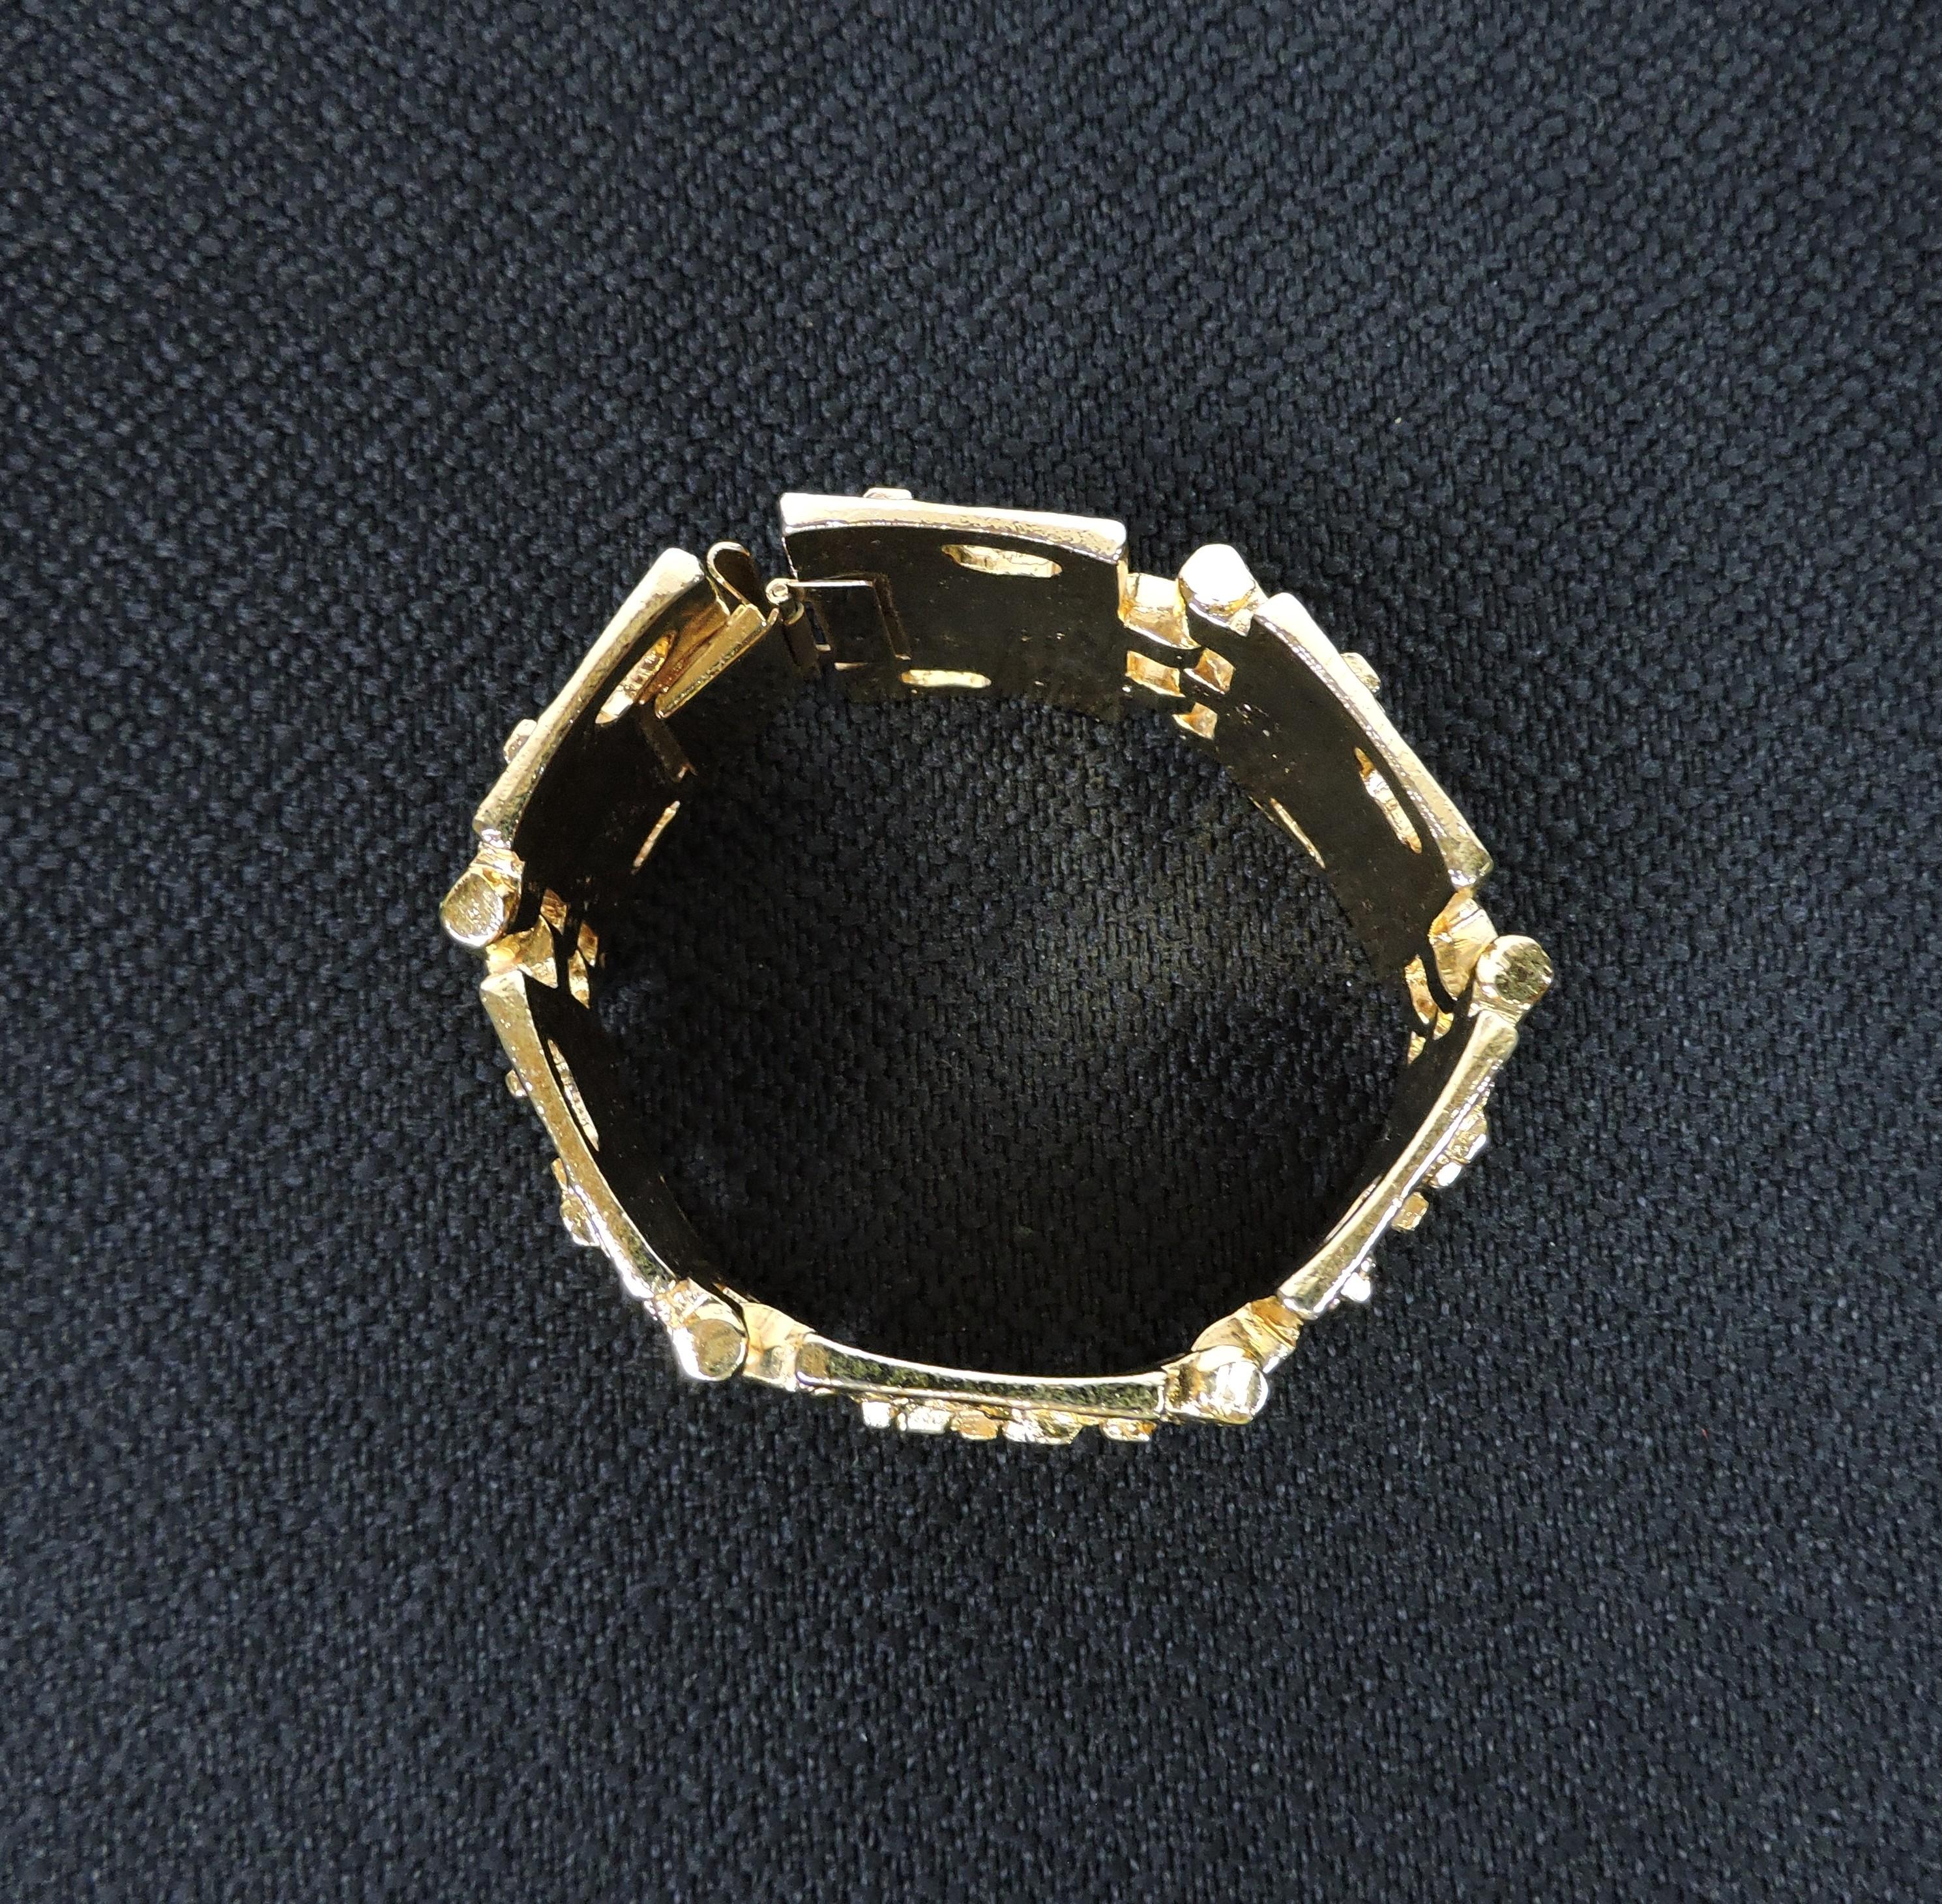 Plated Robert Larin Brutalist Modernist Sculptural Bracelet, Canadian Art Jewelry For Sale